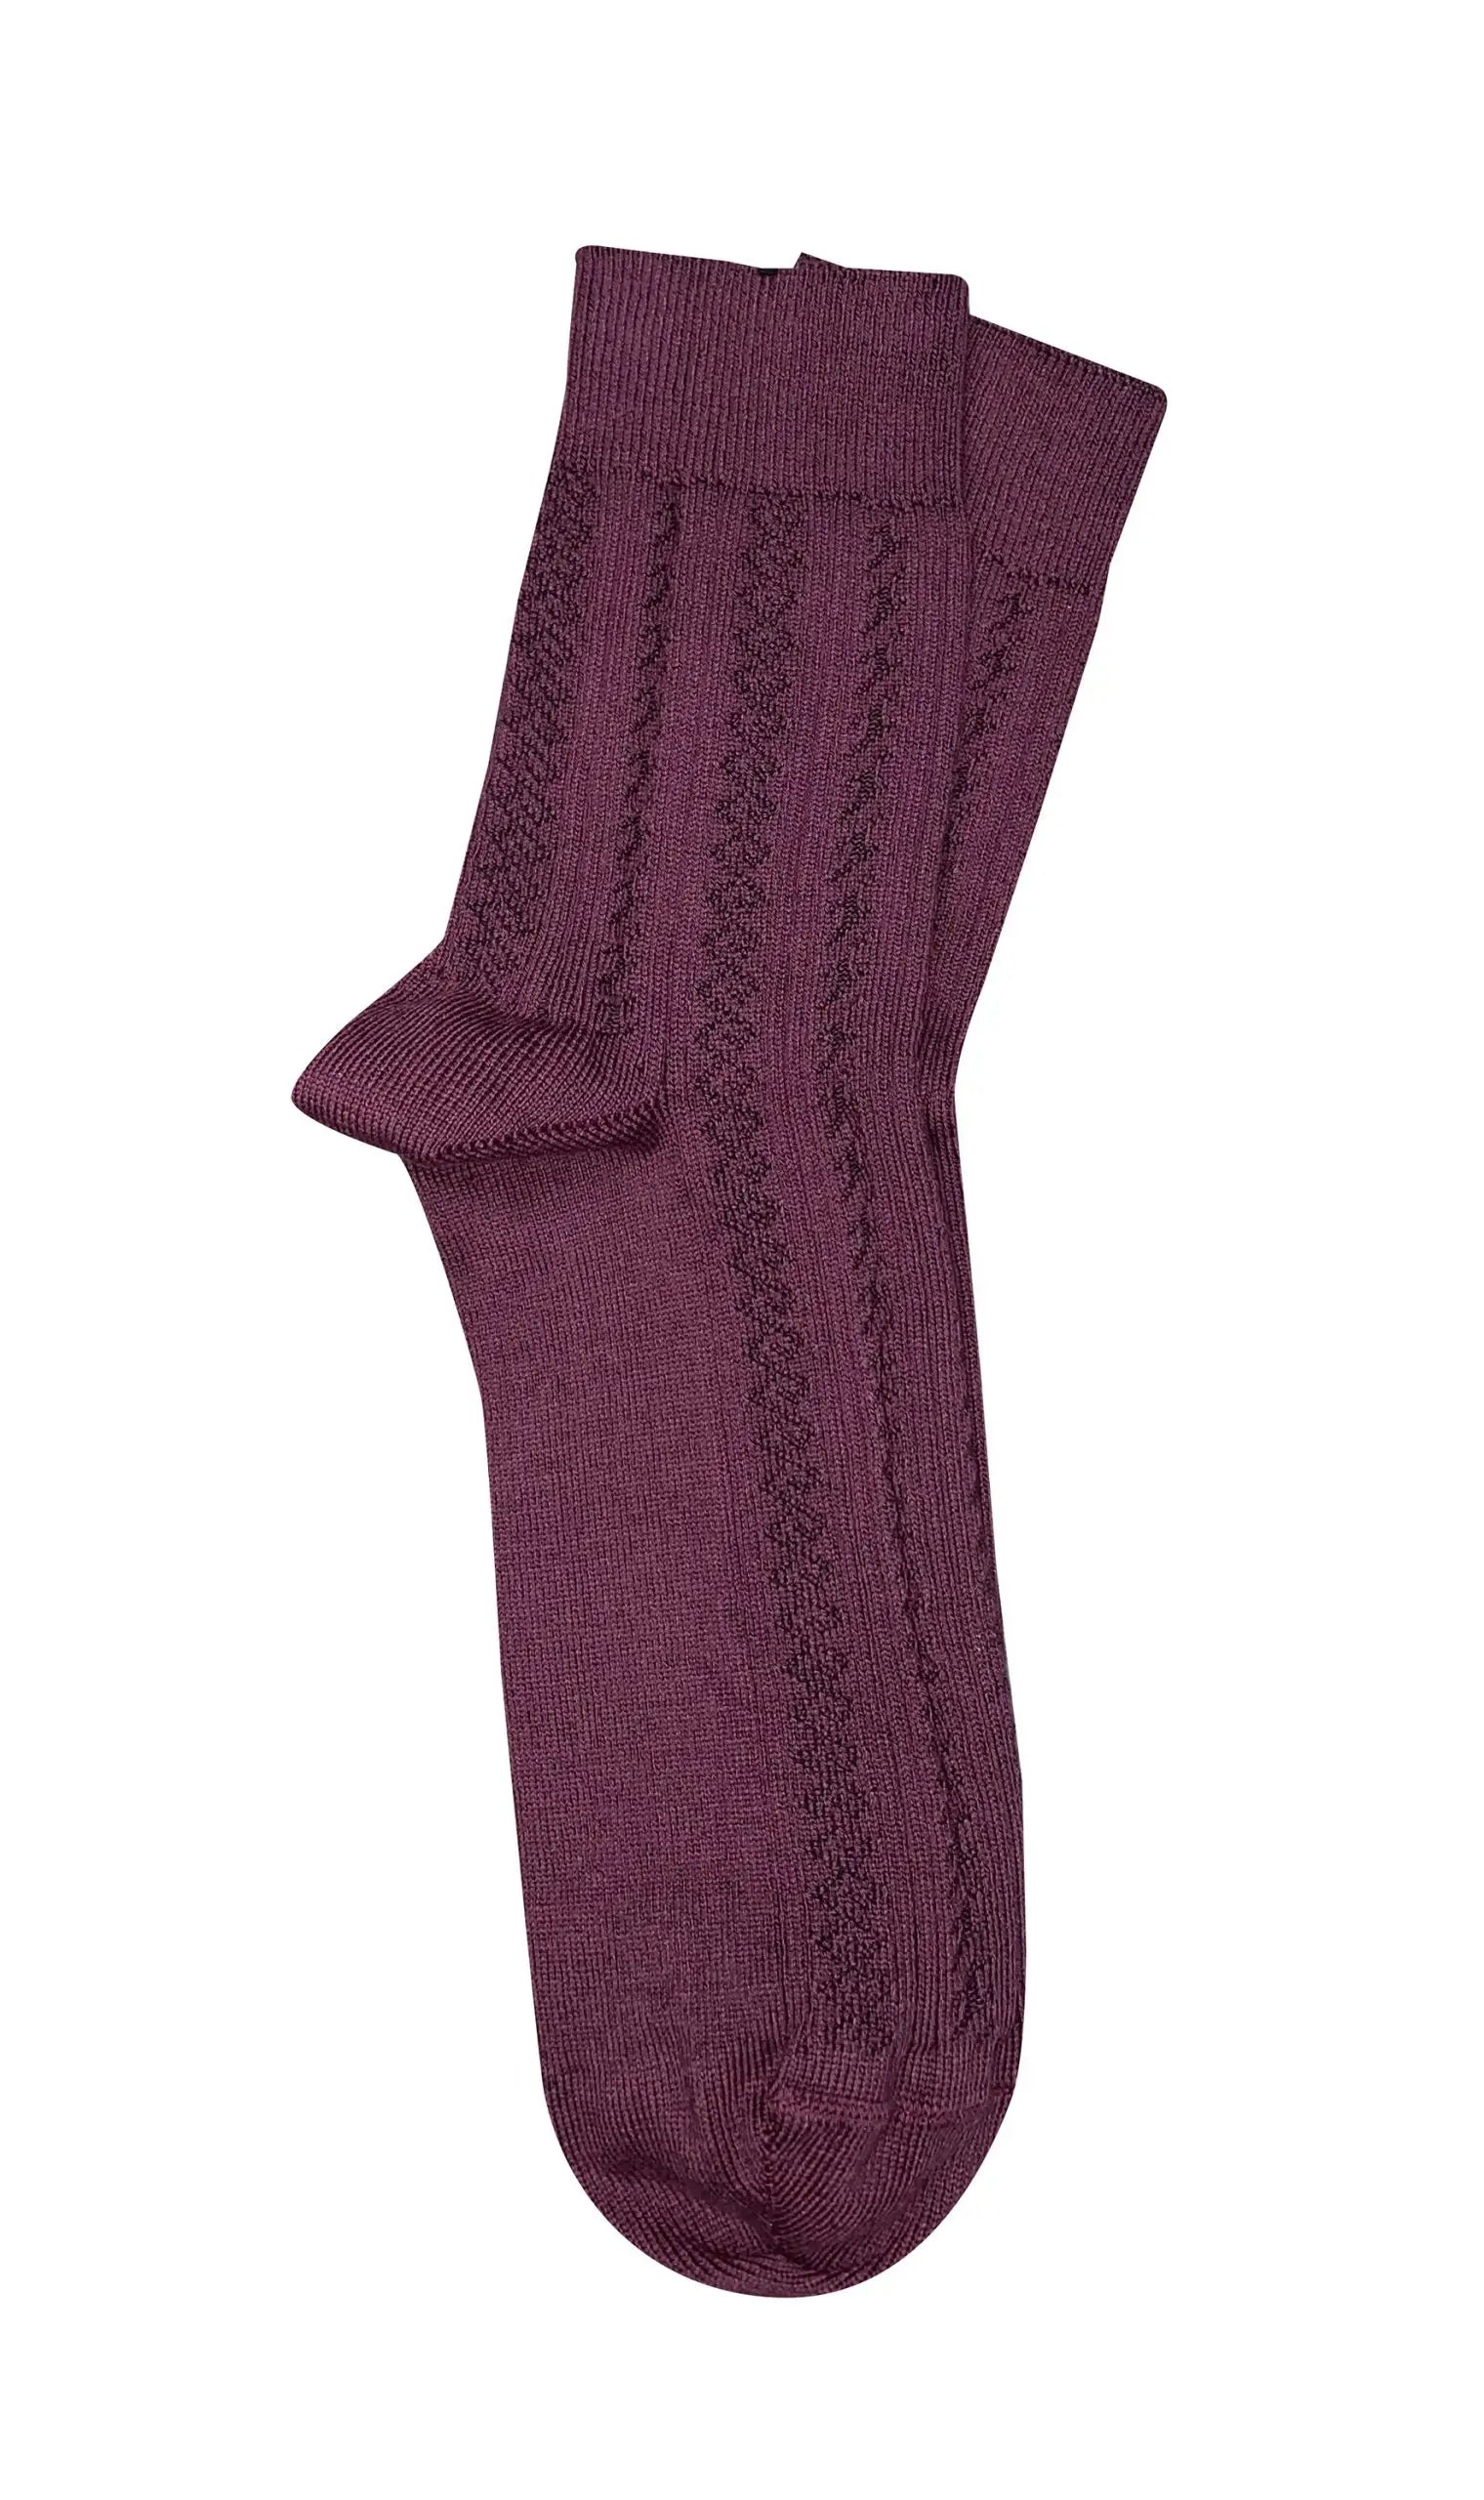 Cotton Aussie Made Socks (One Size) - Tightology socks Tightology Burgundy Short Monte